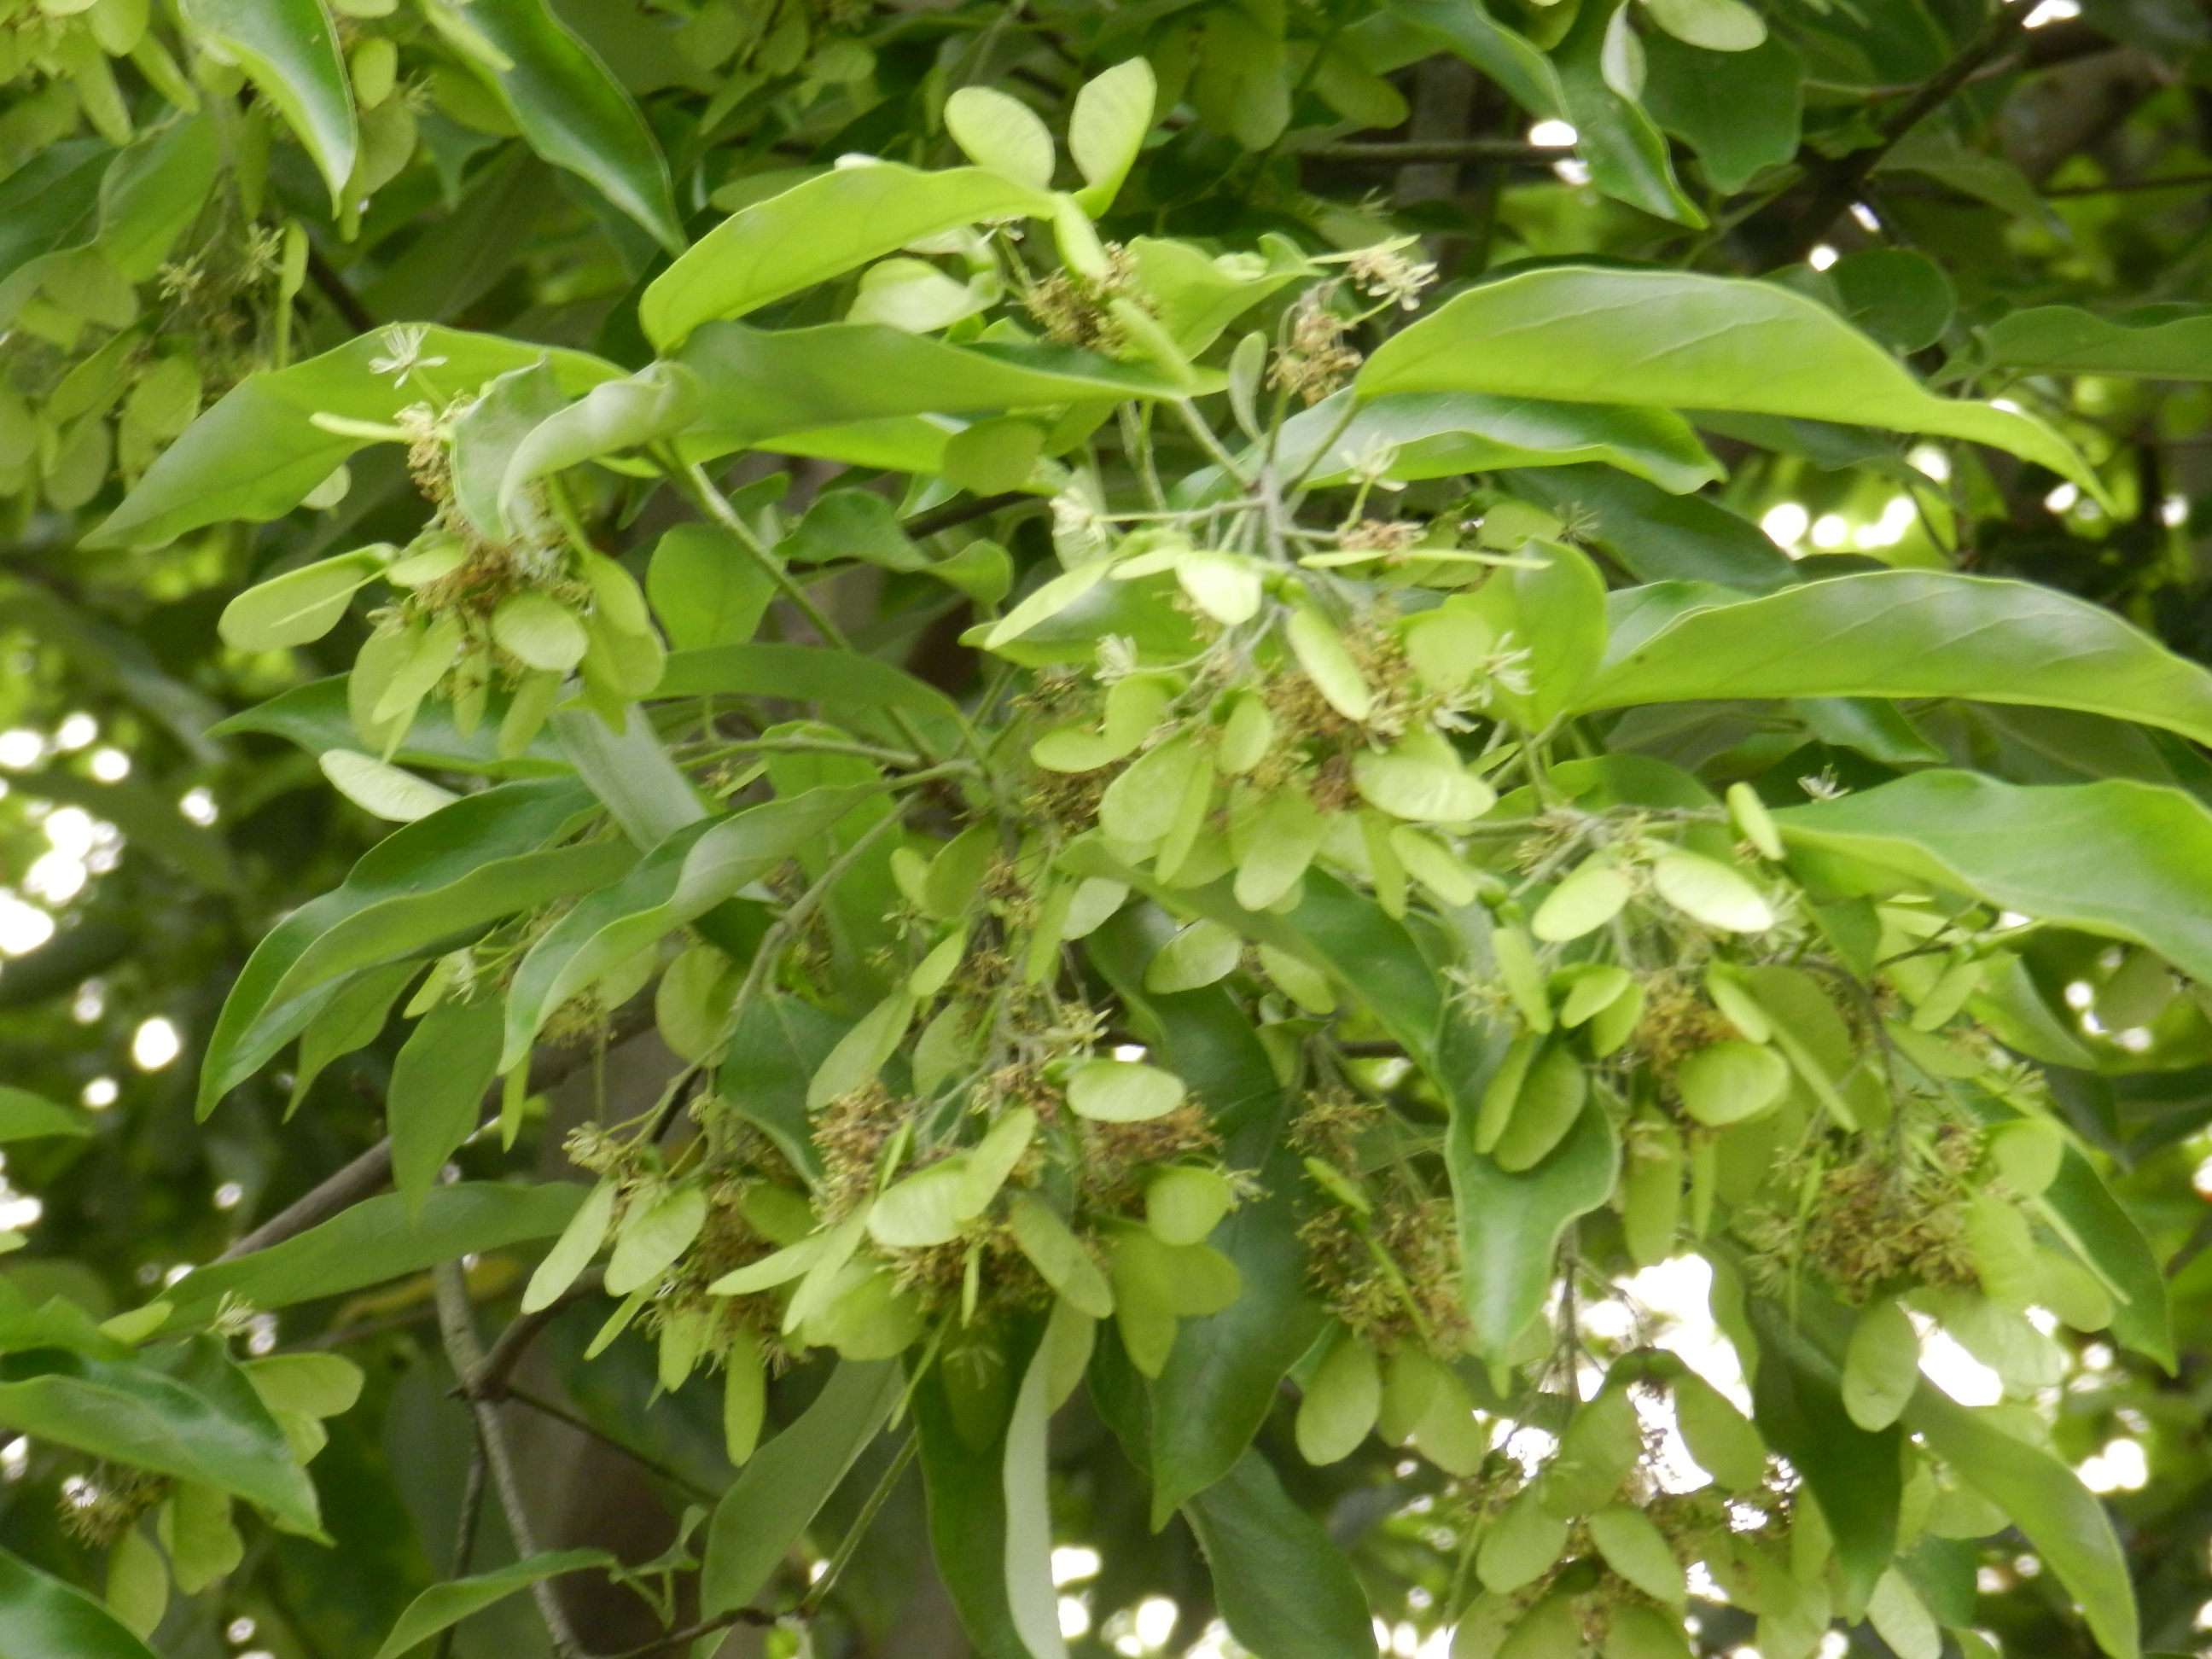 acer albopurpurascens hayata)也叫飞蛾子树,属槭树科,常绿乔木,高8